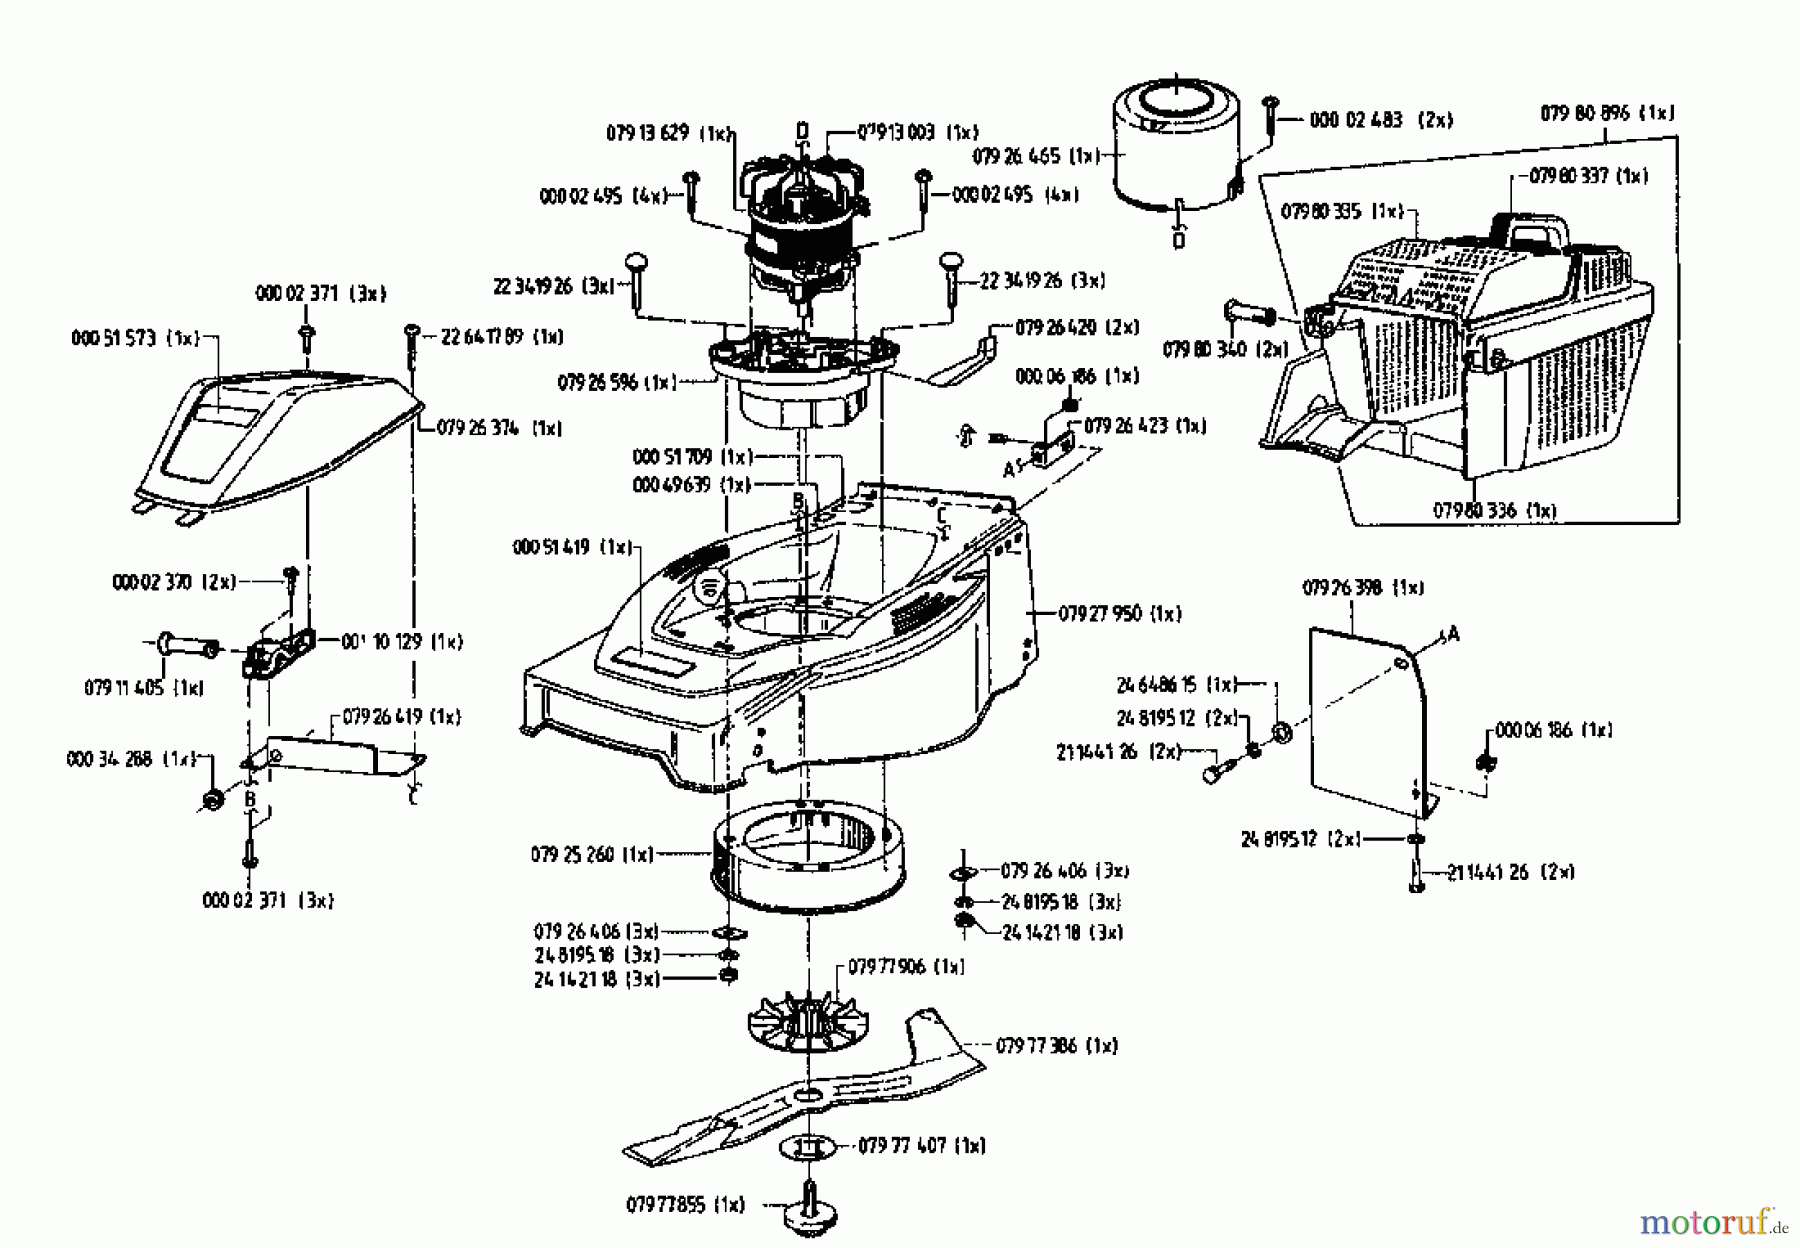  Gutbrod Electric mower HE 48 02817.04  (1995) Basic machine